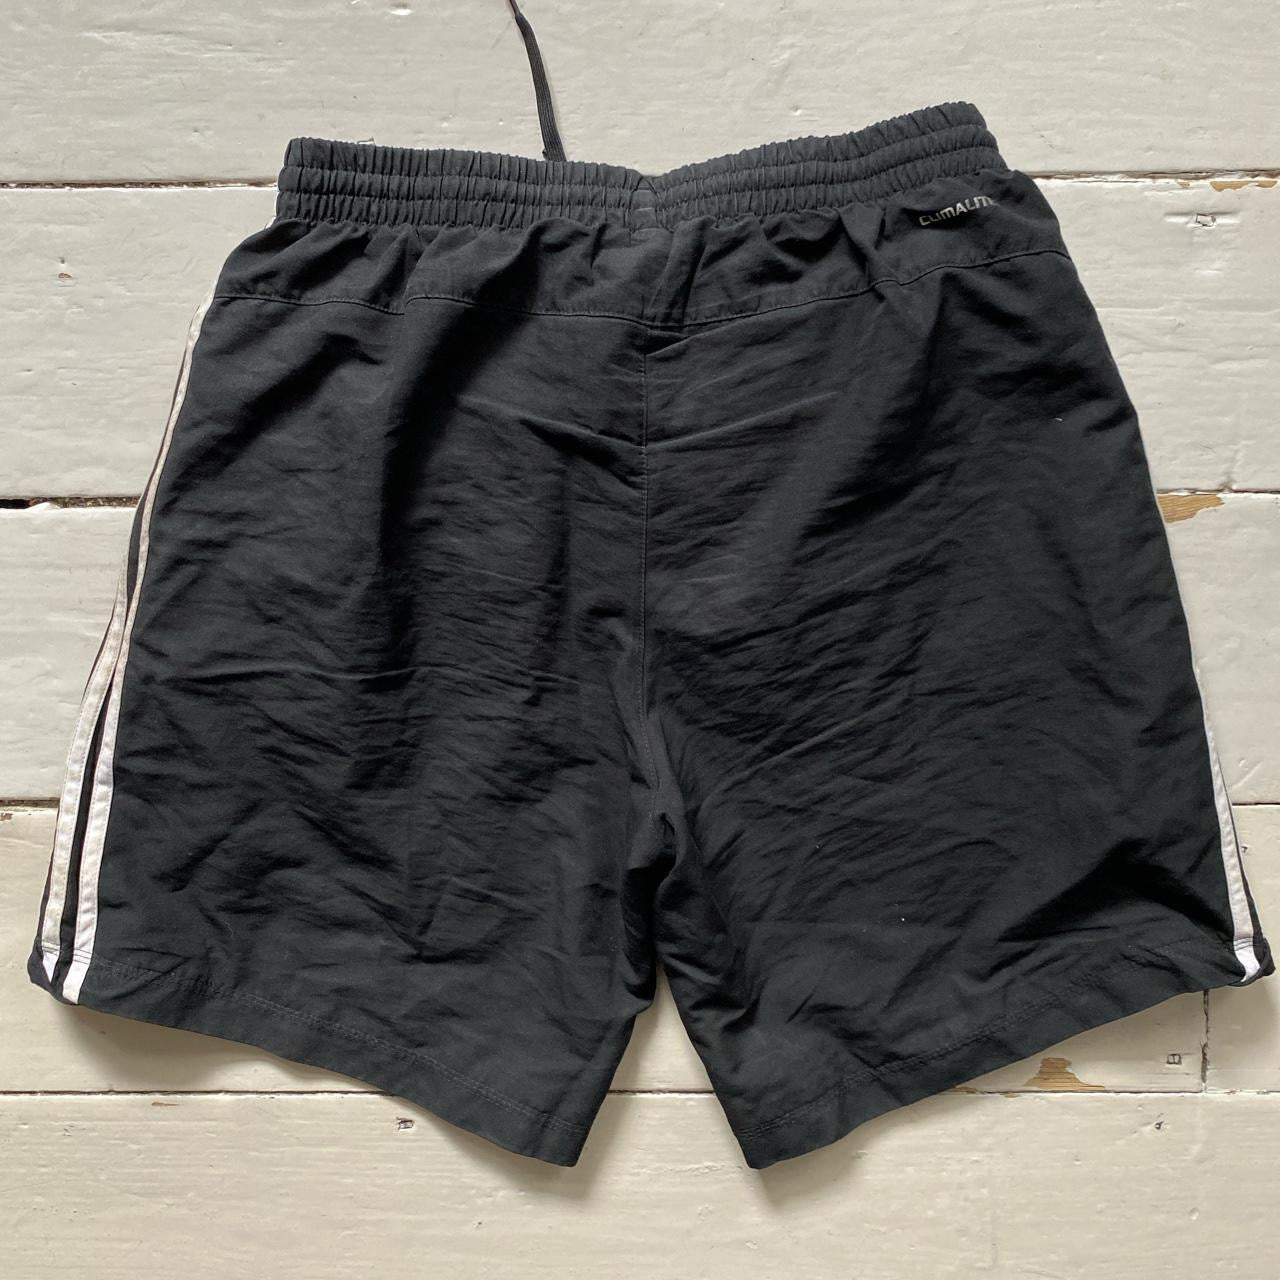 Adidas Black Shell Shorts (Medium)